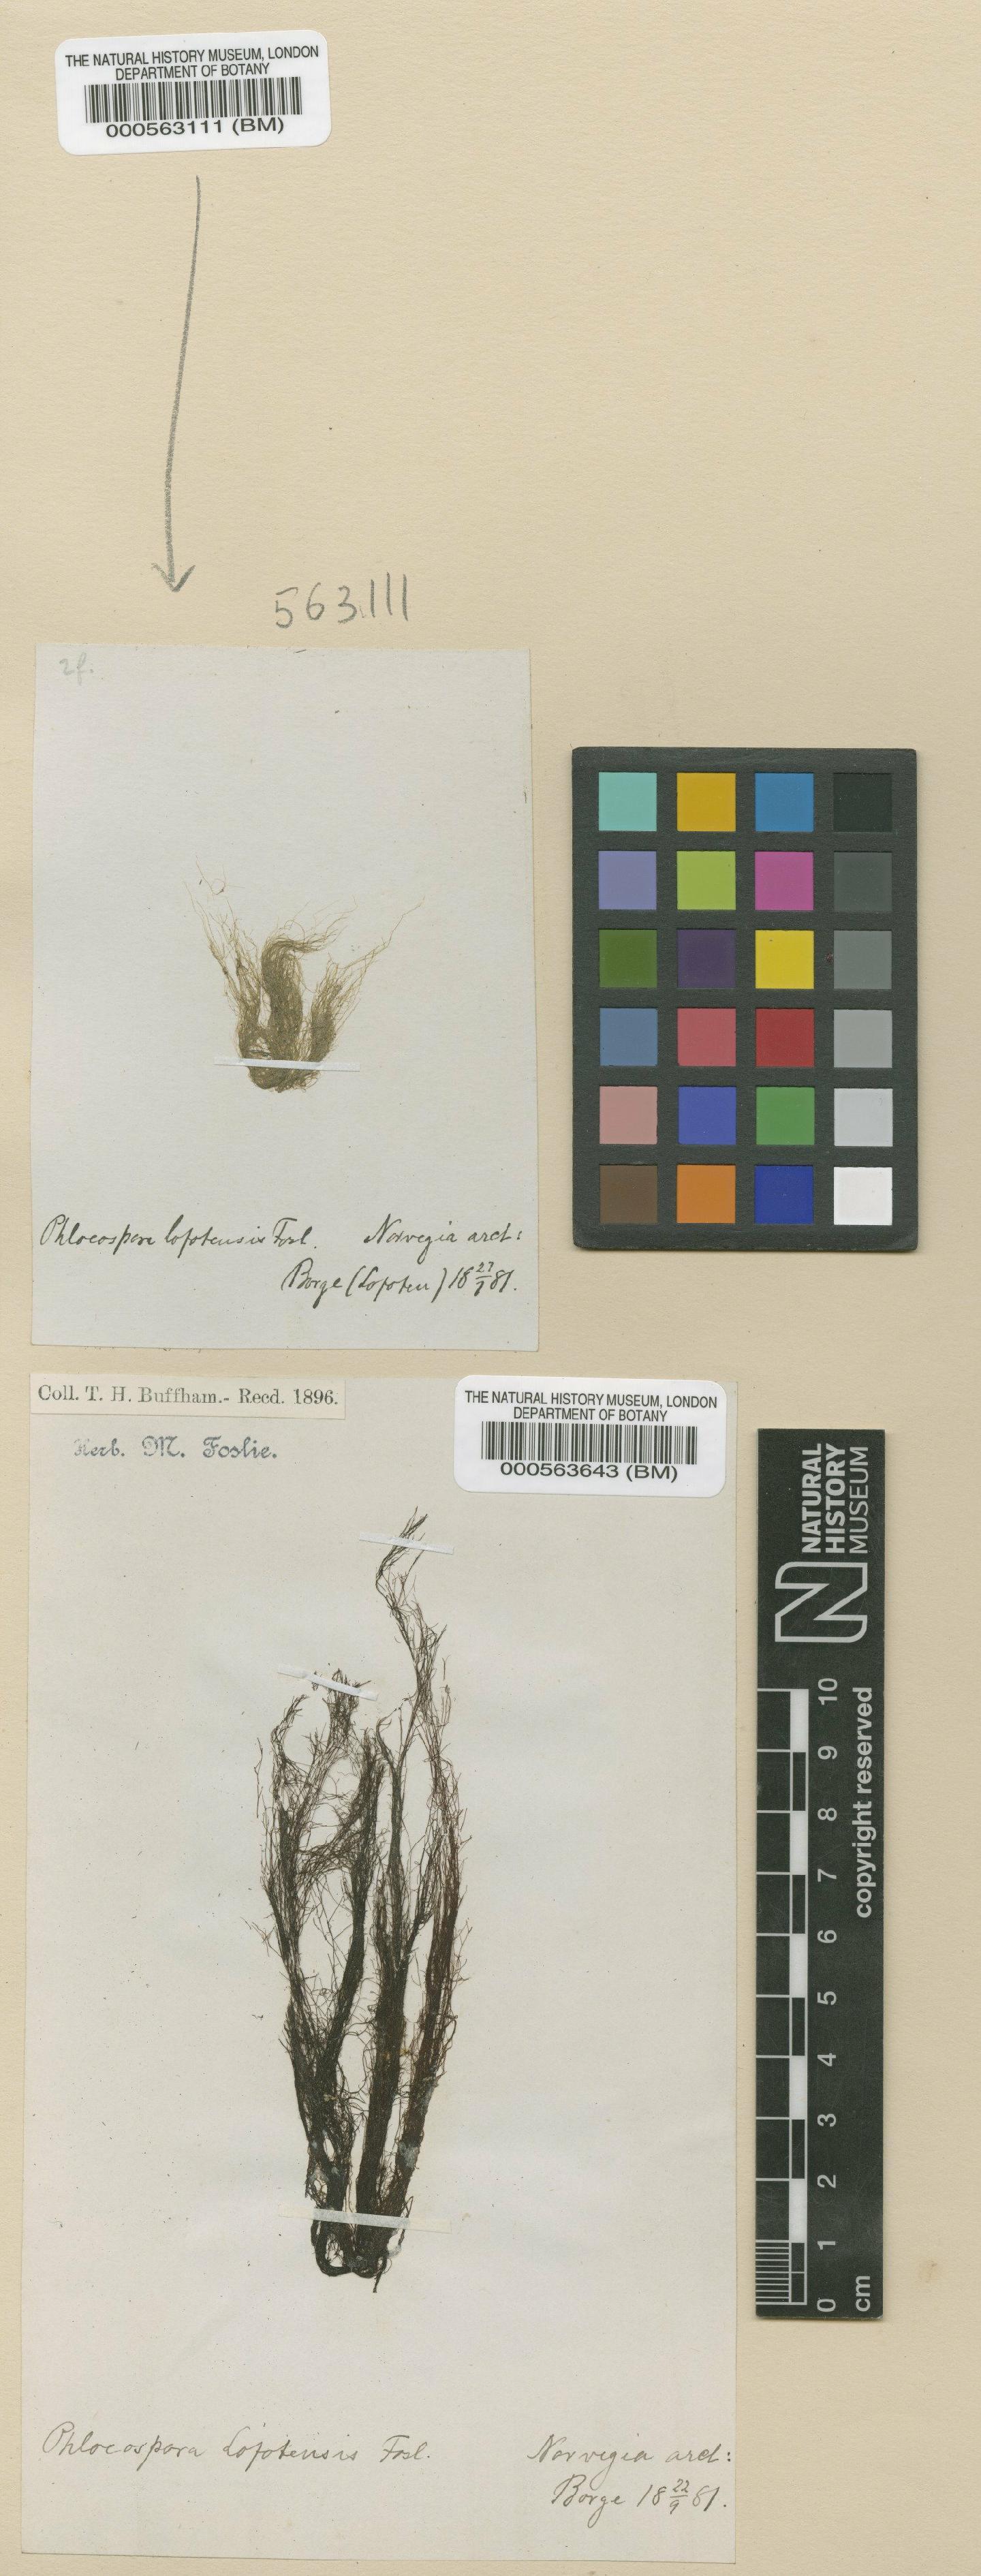 To NHMUK collection (Stictyosiphon lofotensis (Foslie) Jaasund; Syntype; NHMUK:ecatalogue:664292)